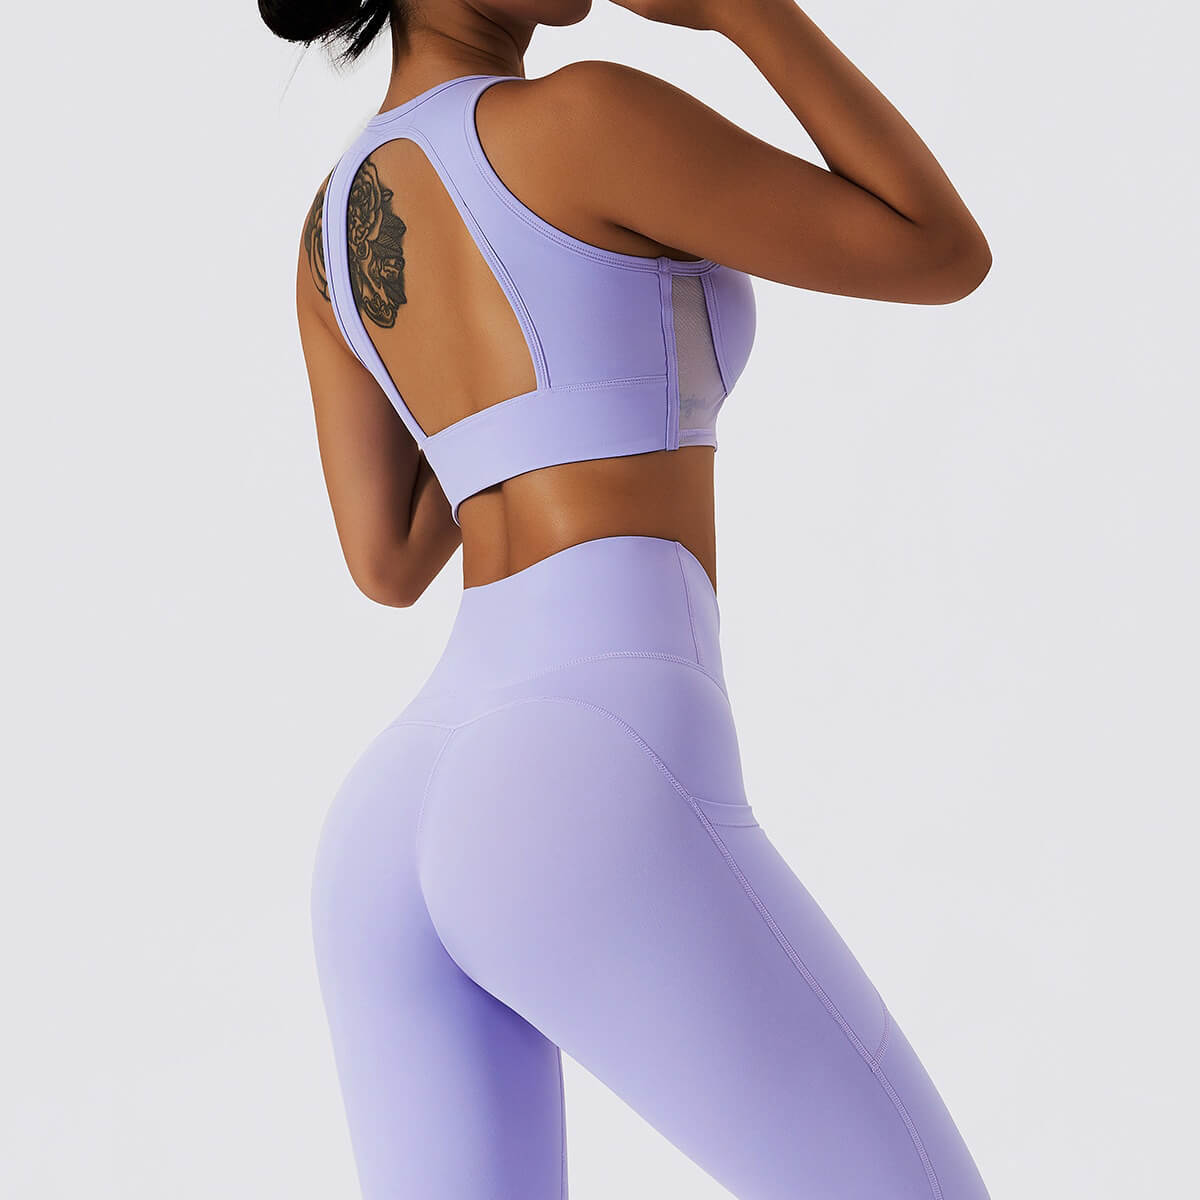 Sports Mesh Breathable Yoga Bra / Women's Activewear - SF1000